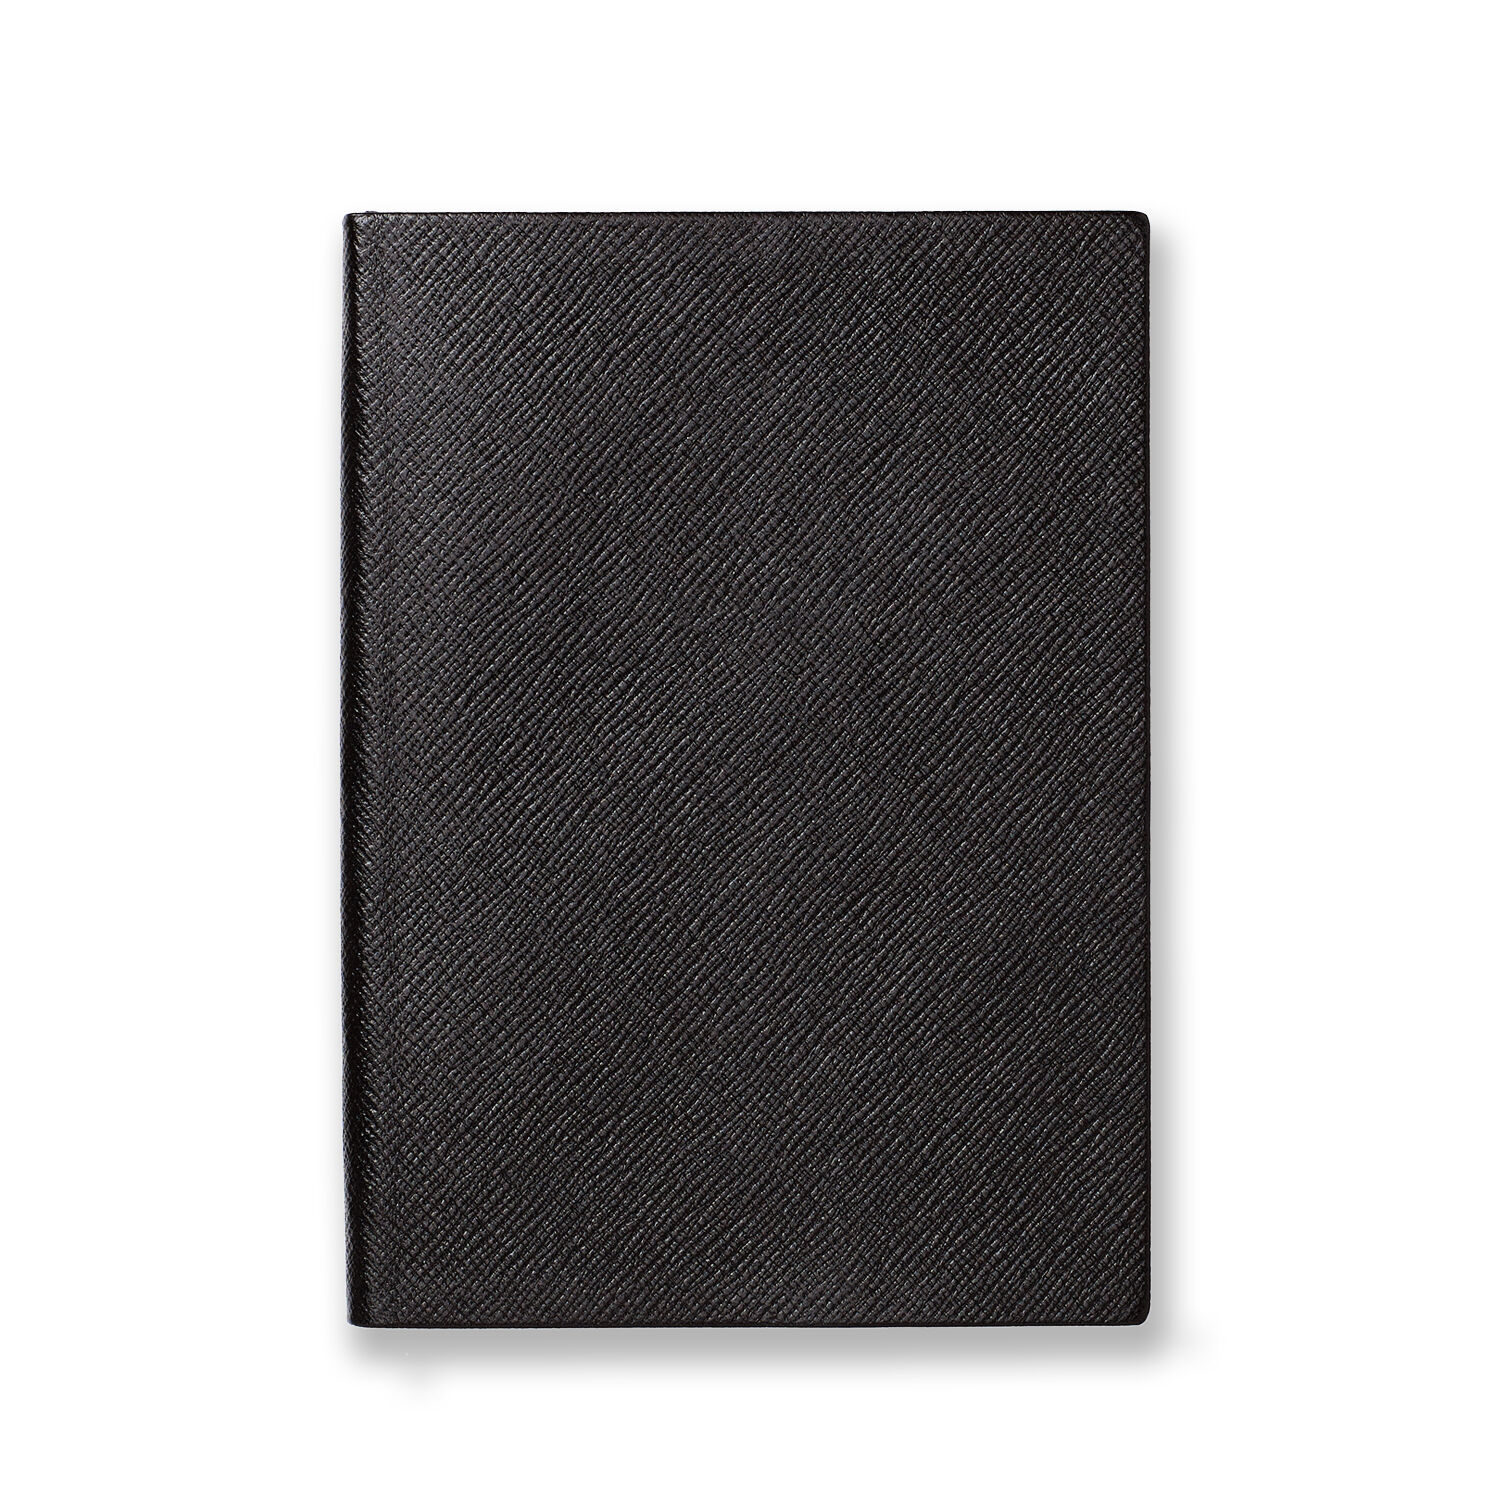 Soho Notebook in Panama in black | Smythson